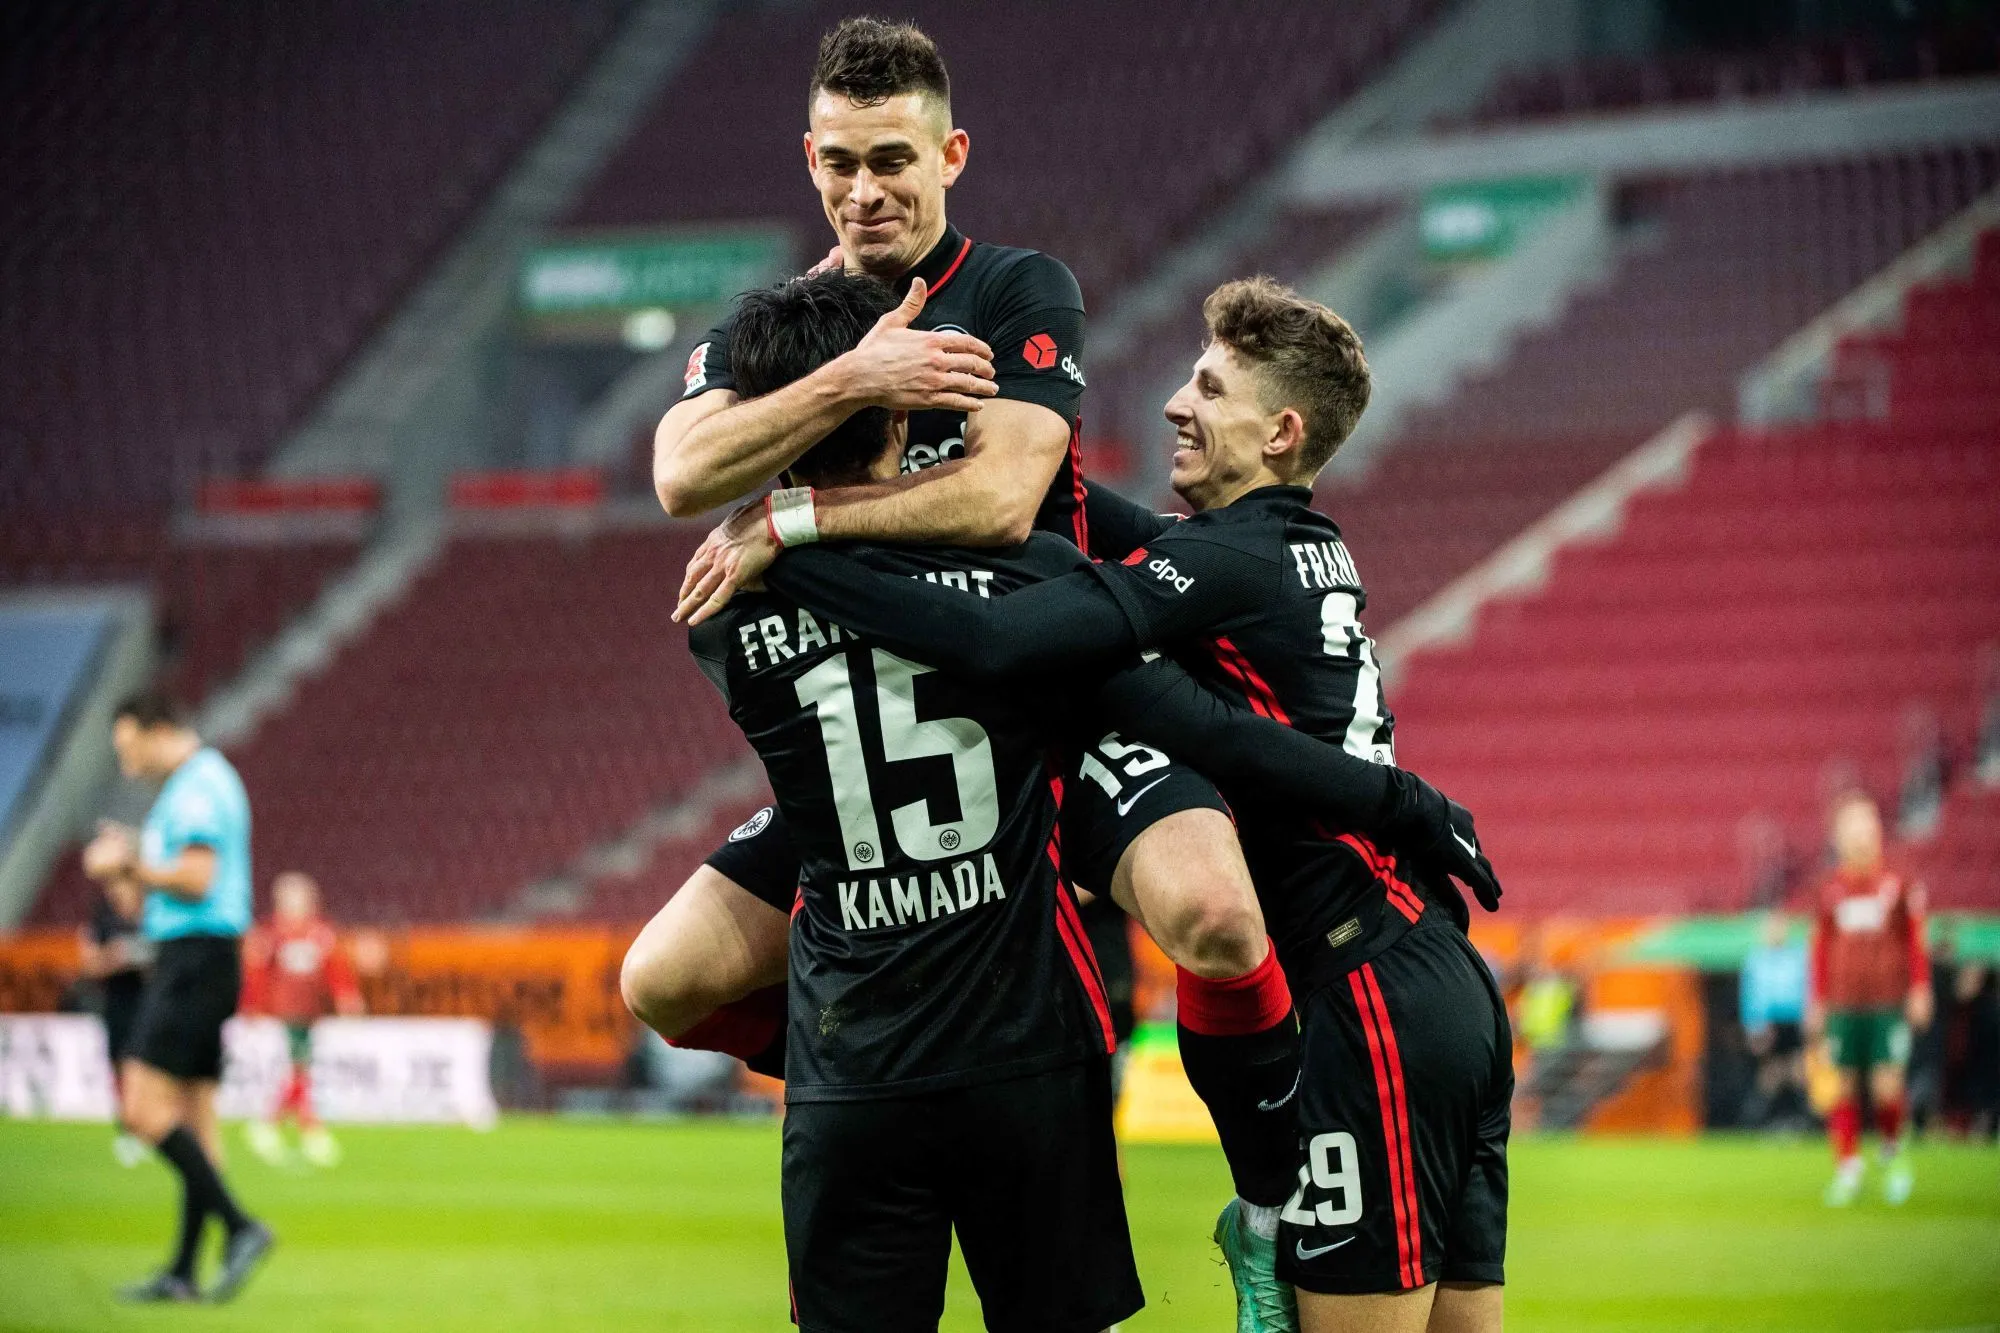 Pronostic Eintracht Francfort Arminia Bielefeld : Analyse, cotes et pronostic du match de Bundesliga